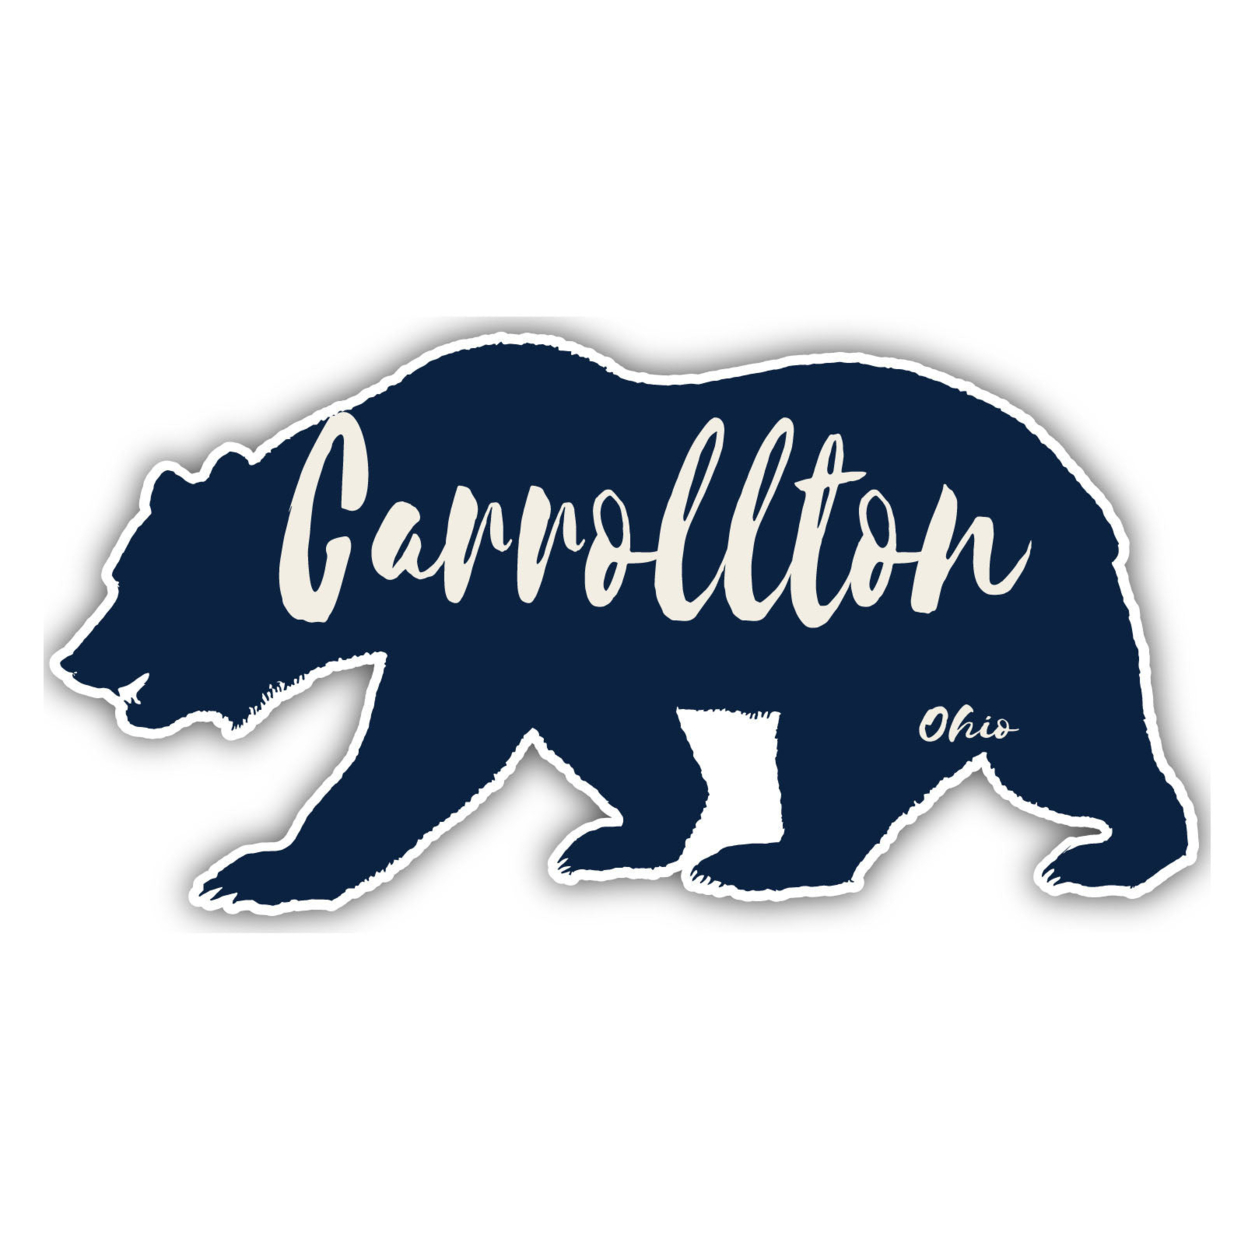 Carrollton Ohio Souvenir Decorative Stickers (Choose Theme And Size) - Single Unit, 10-Inch, Bear